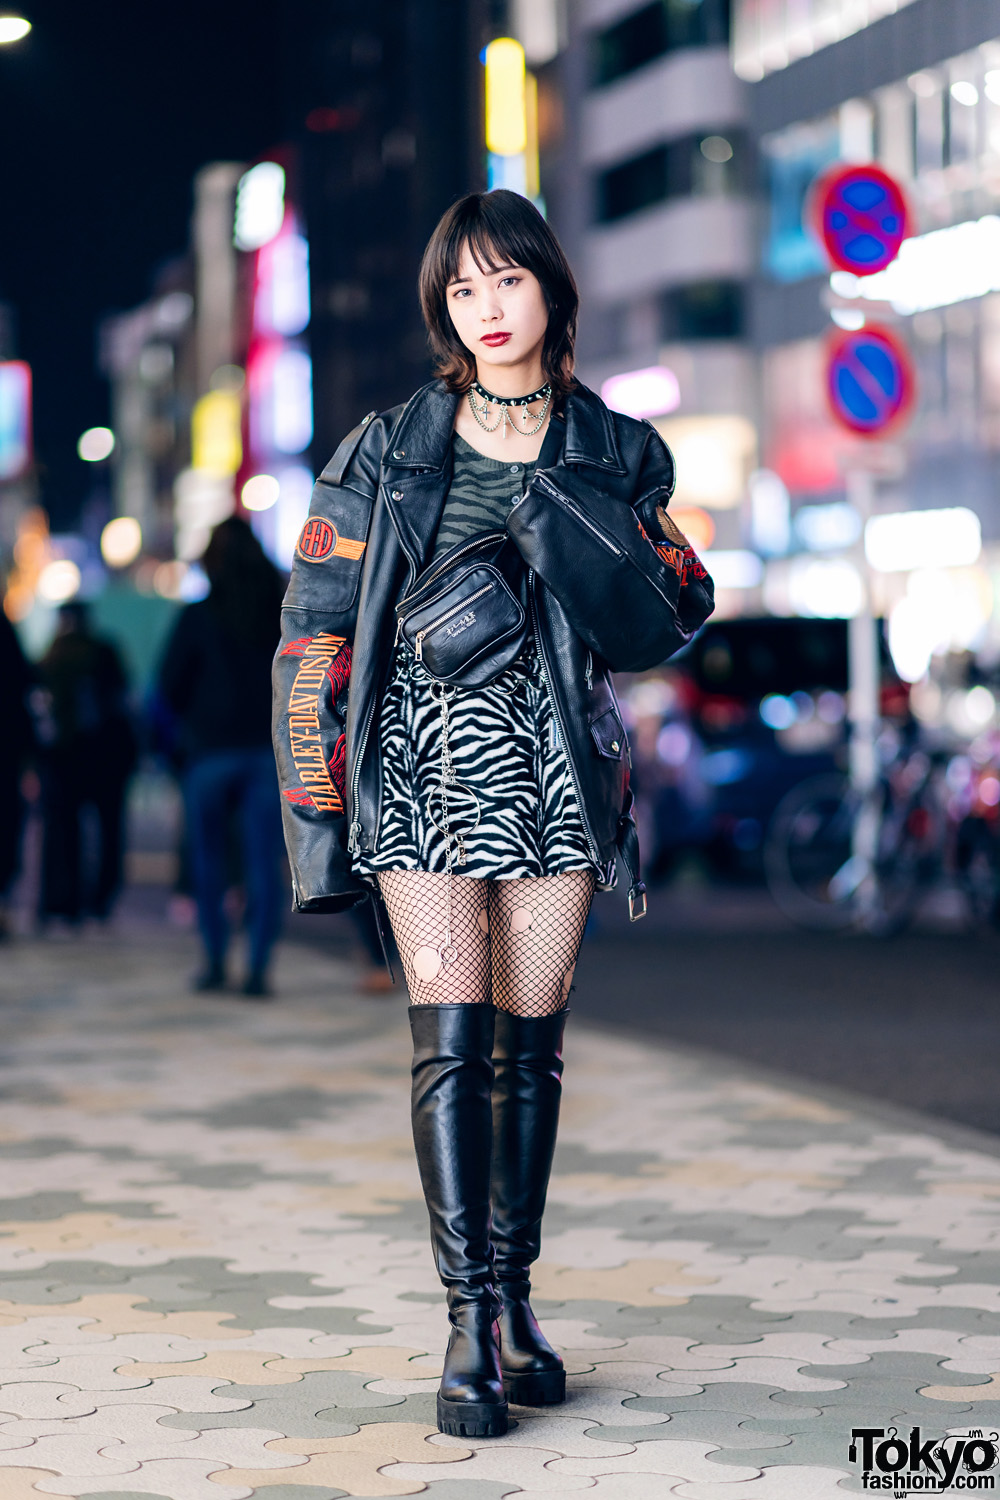 Harajuku Street Style w/ Harley Davidson Leather Jacket, Bubbles Zebra Print Skirt, Torn Fishnets, Boots & Oh Pearl Bag